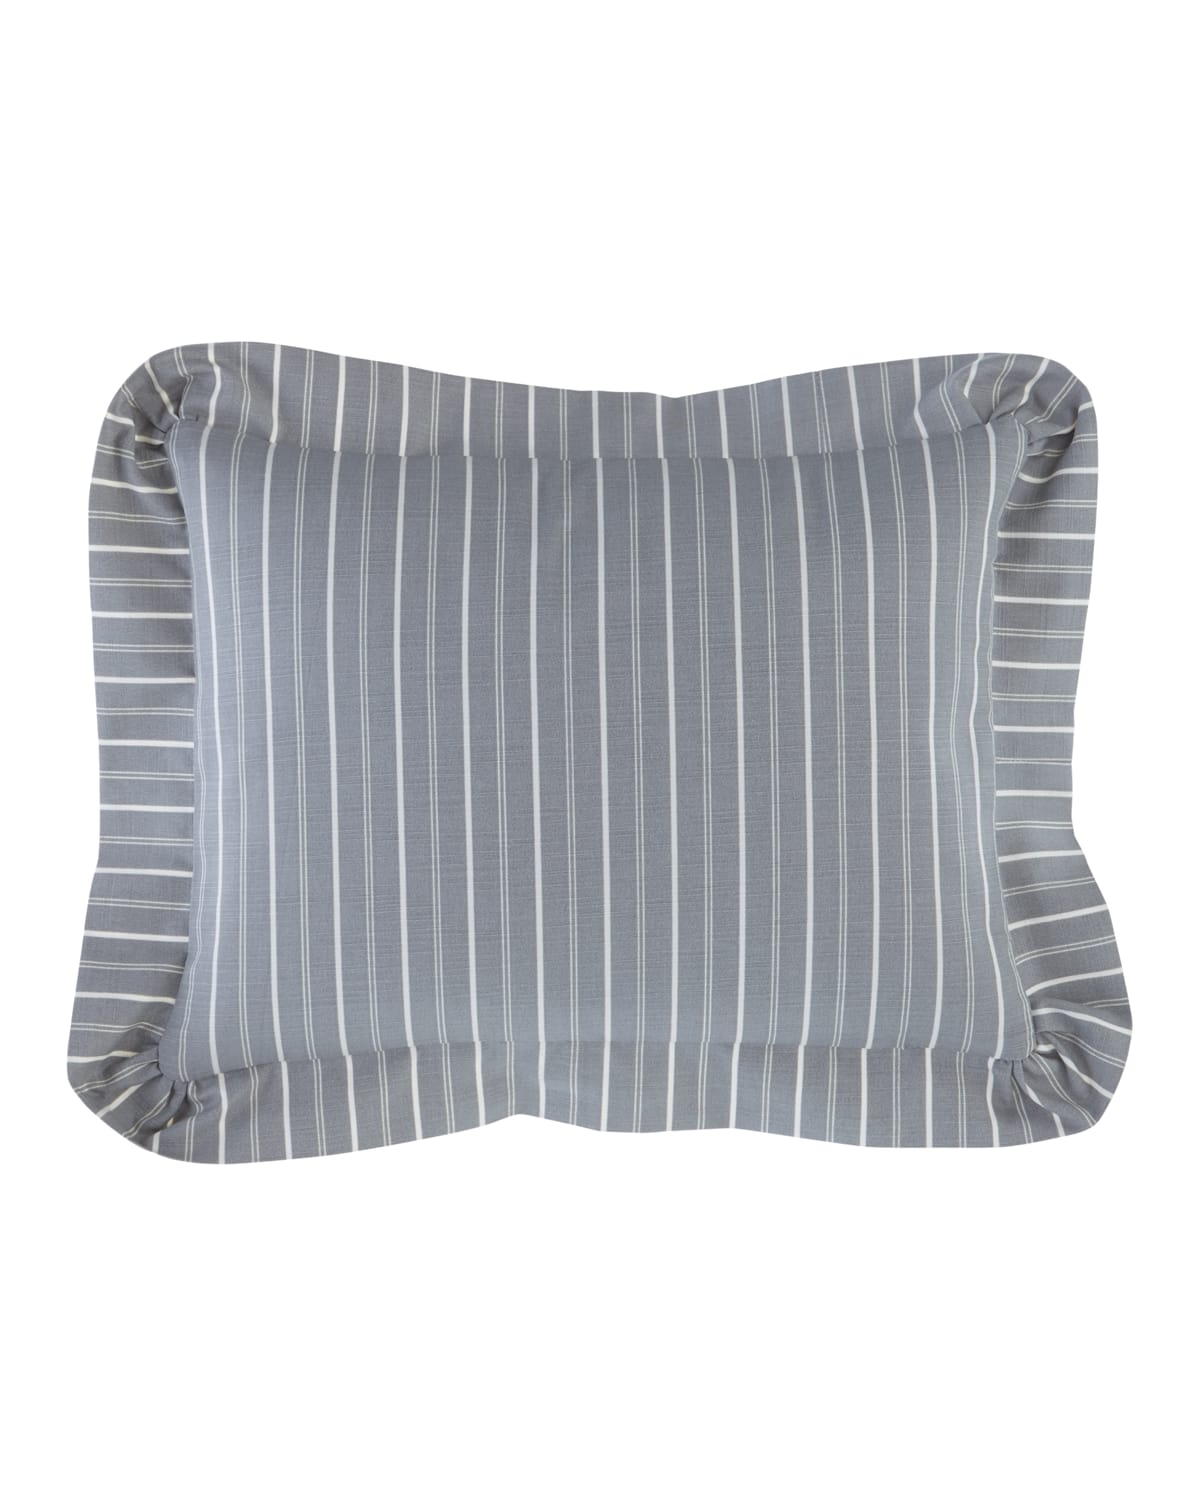 Image Sherry Kline Home Metropolitan Striped Boudoir Pillow